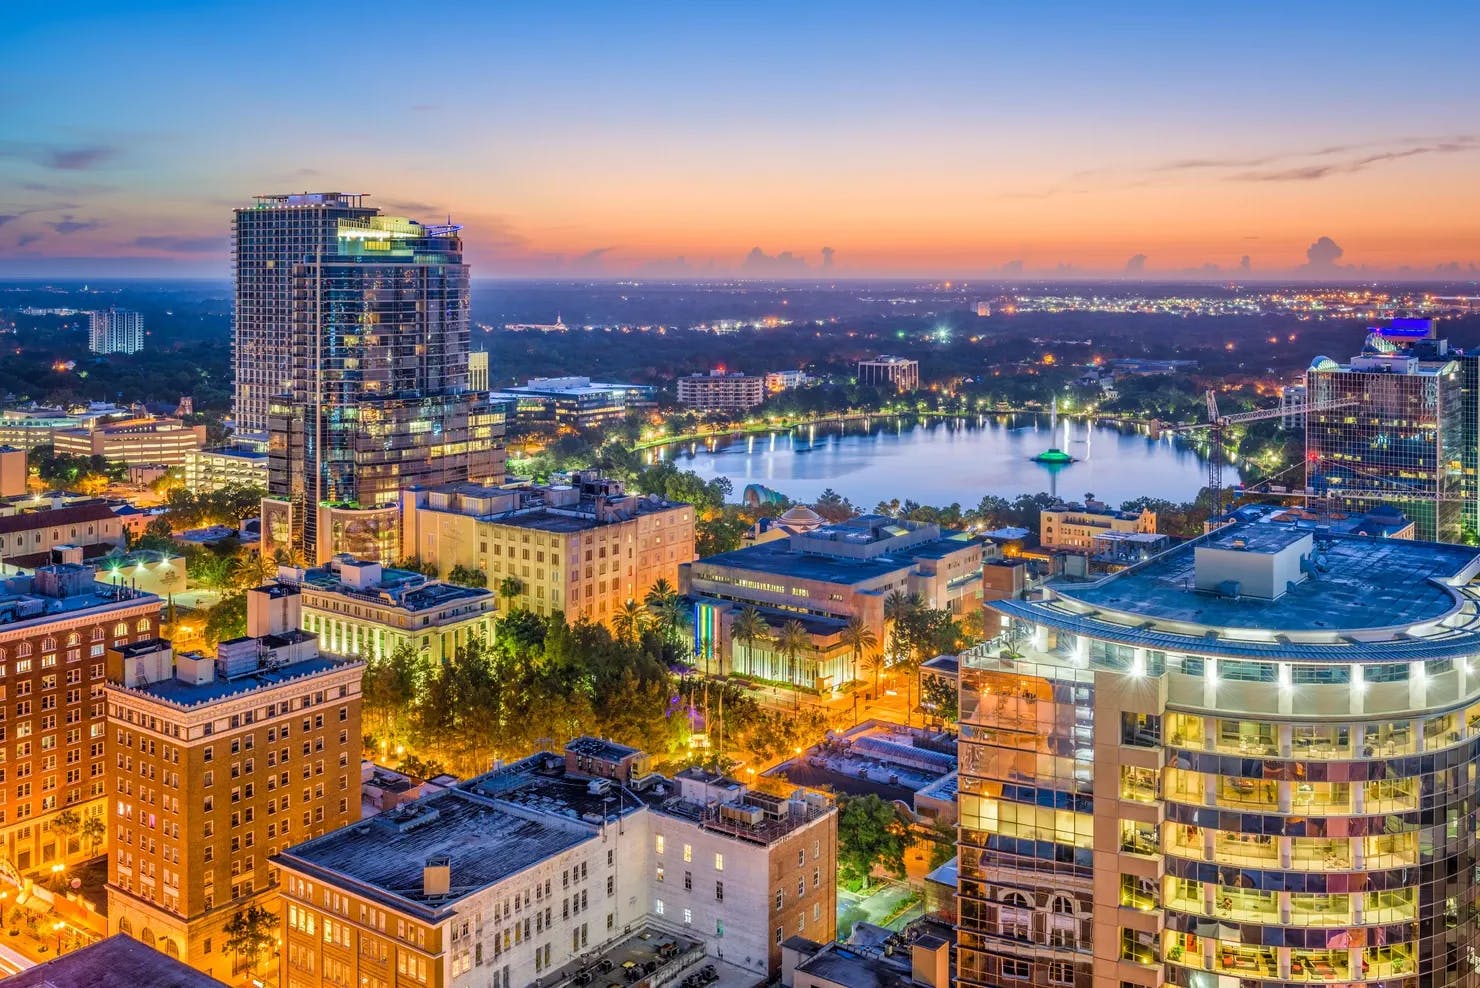 Orlando cityscape at sunset, USA